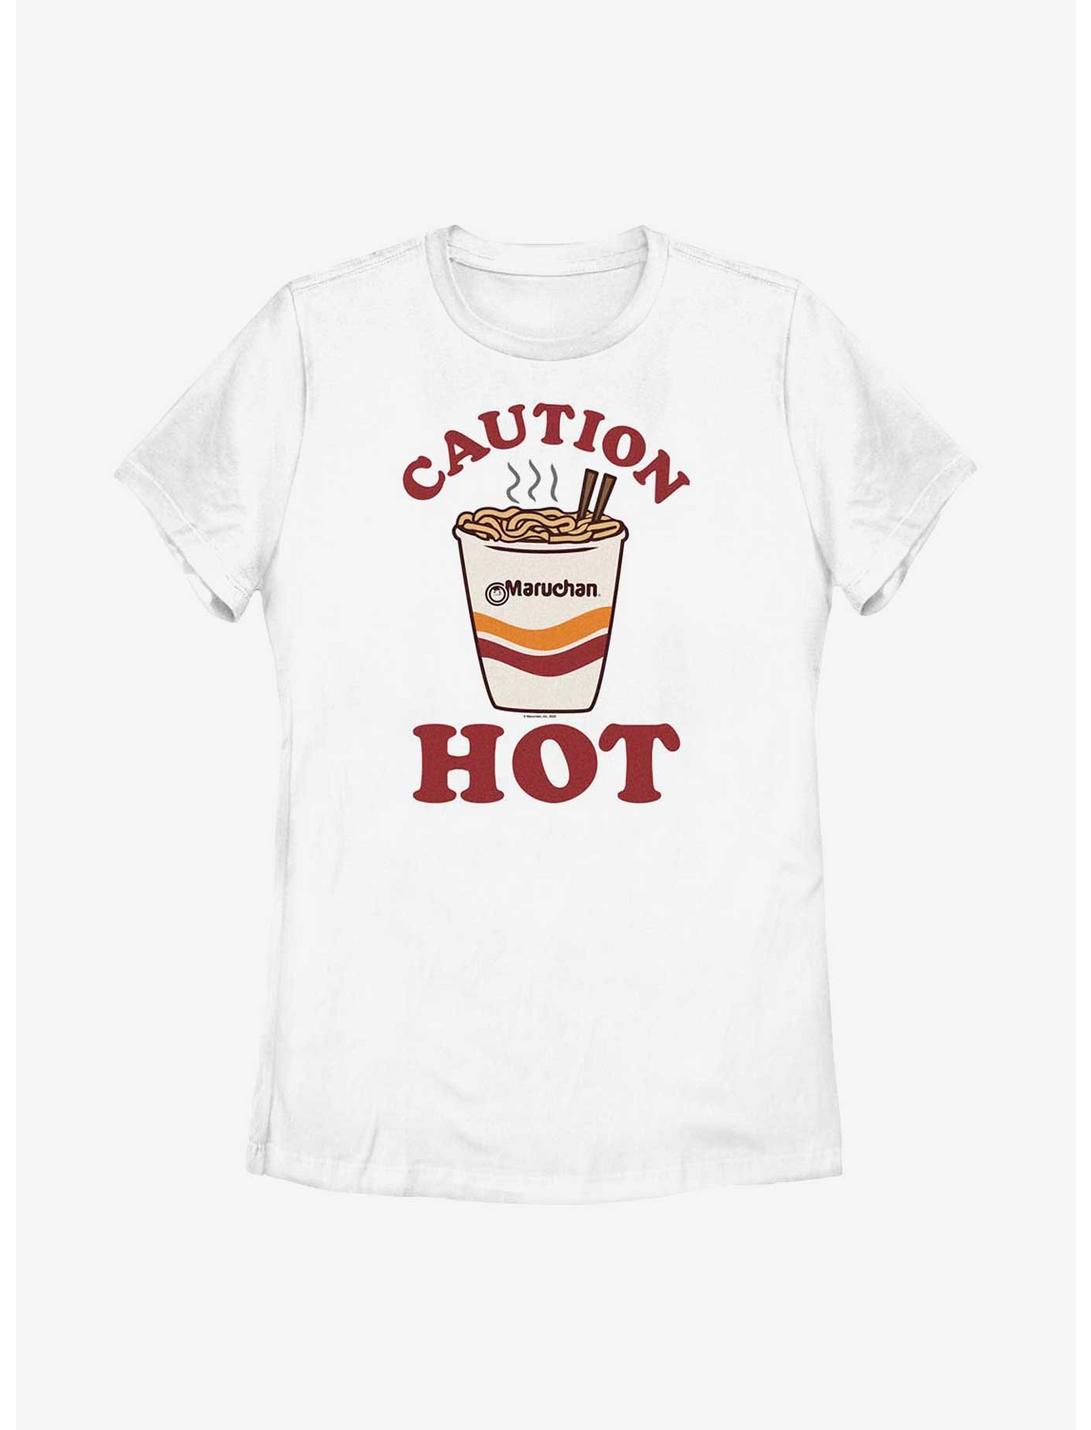 Maruchan Caution Hot Womens T-Shirt, WHITE, hi-res